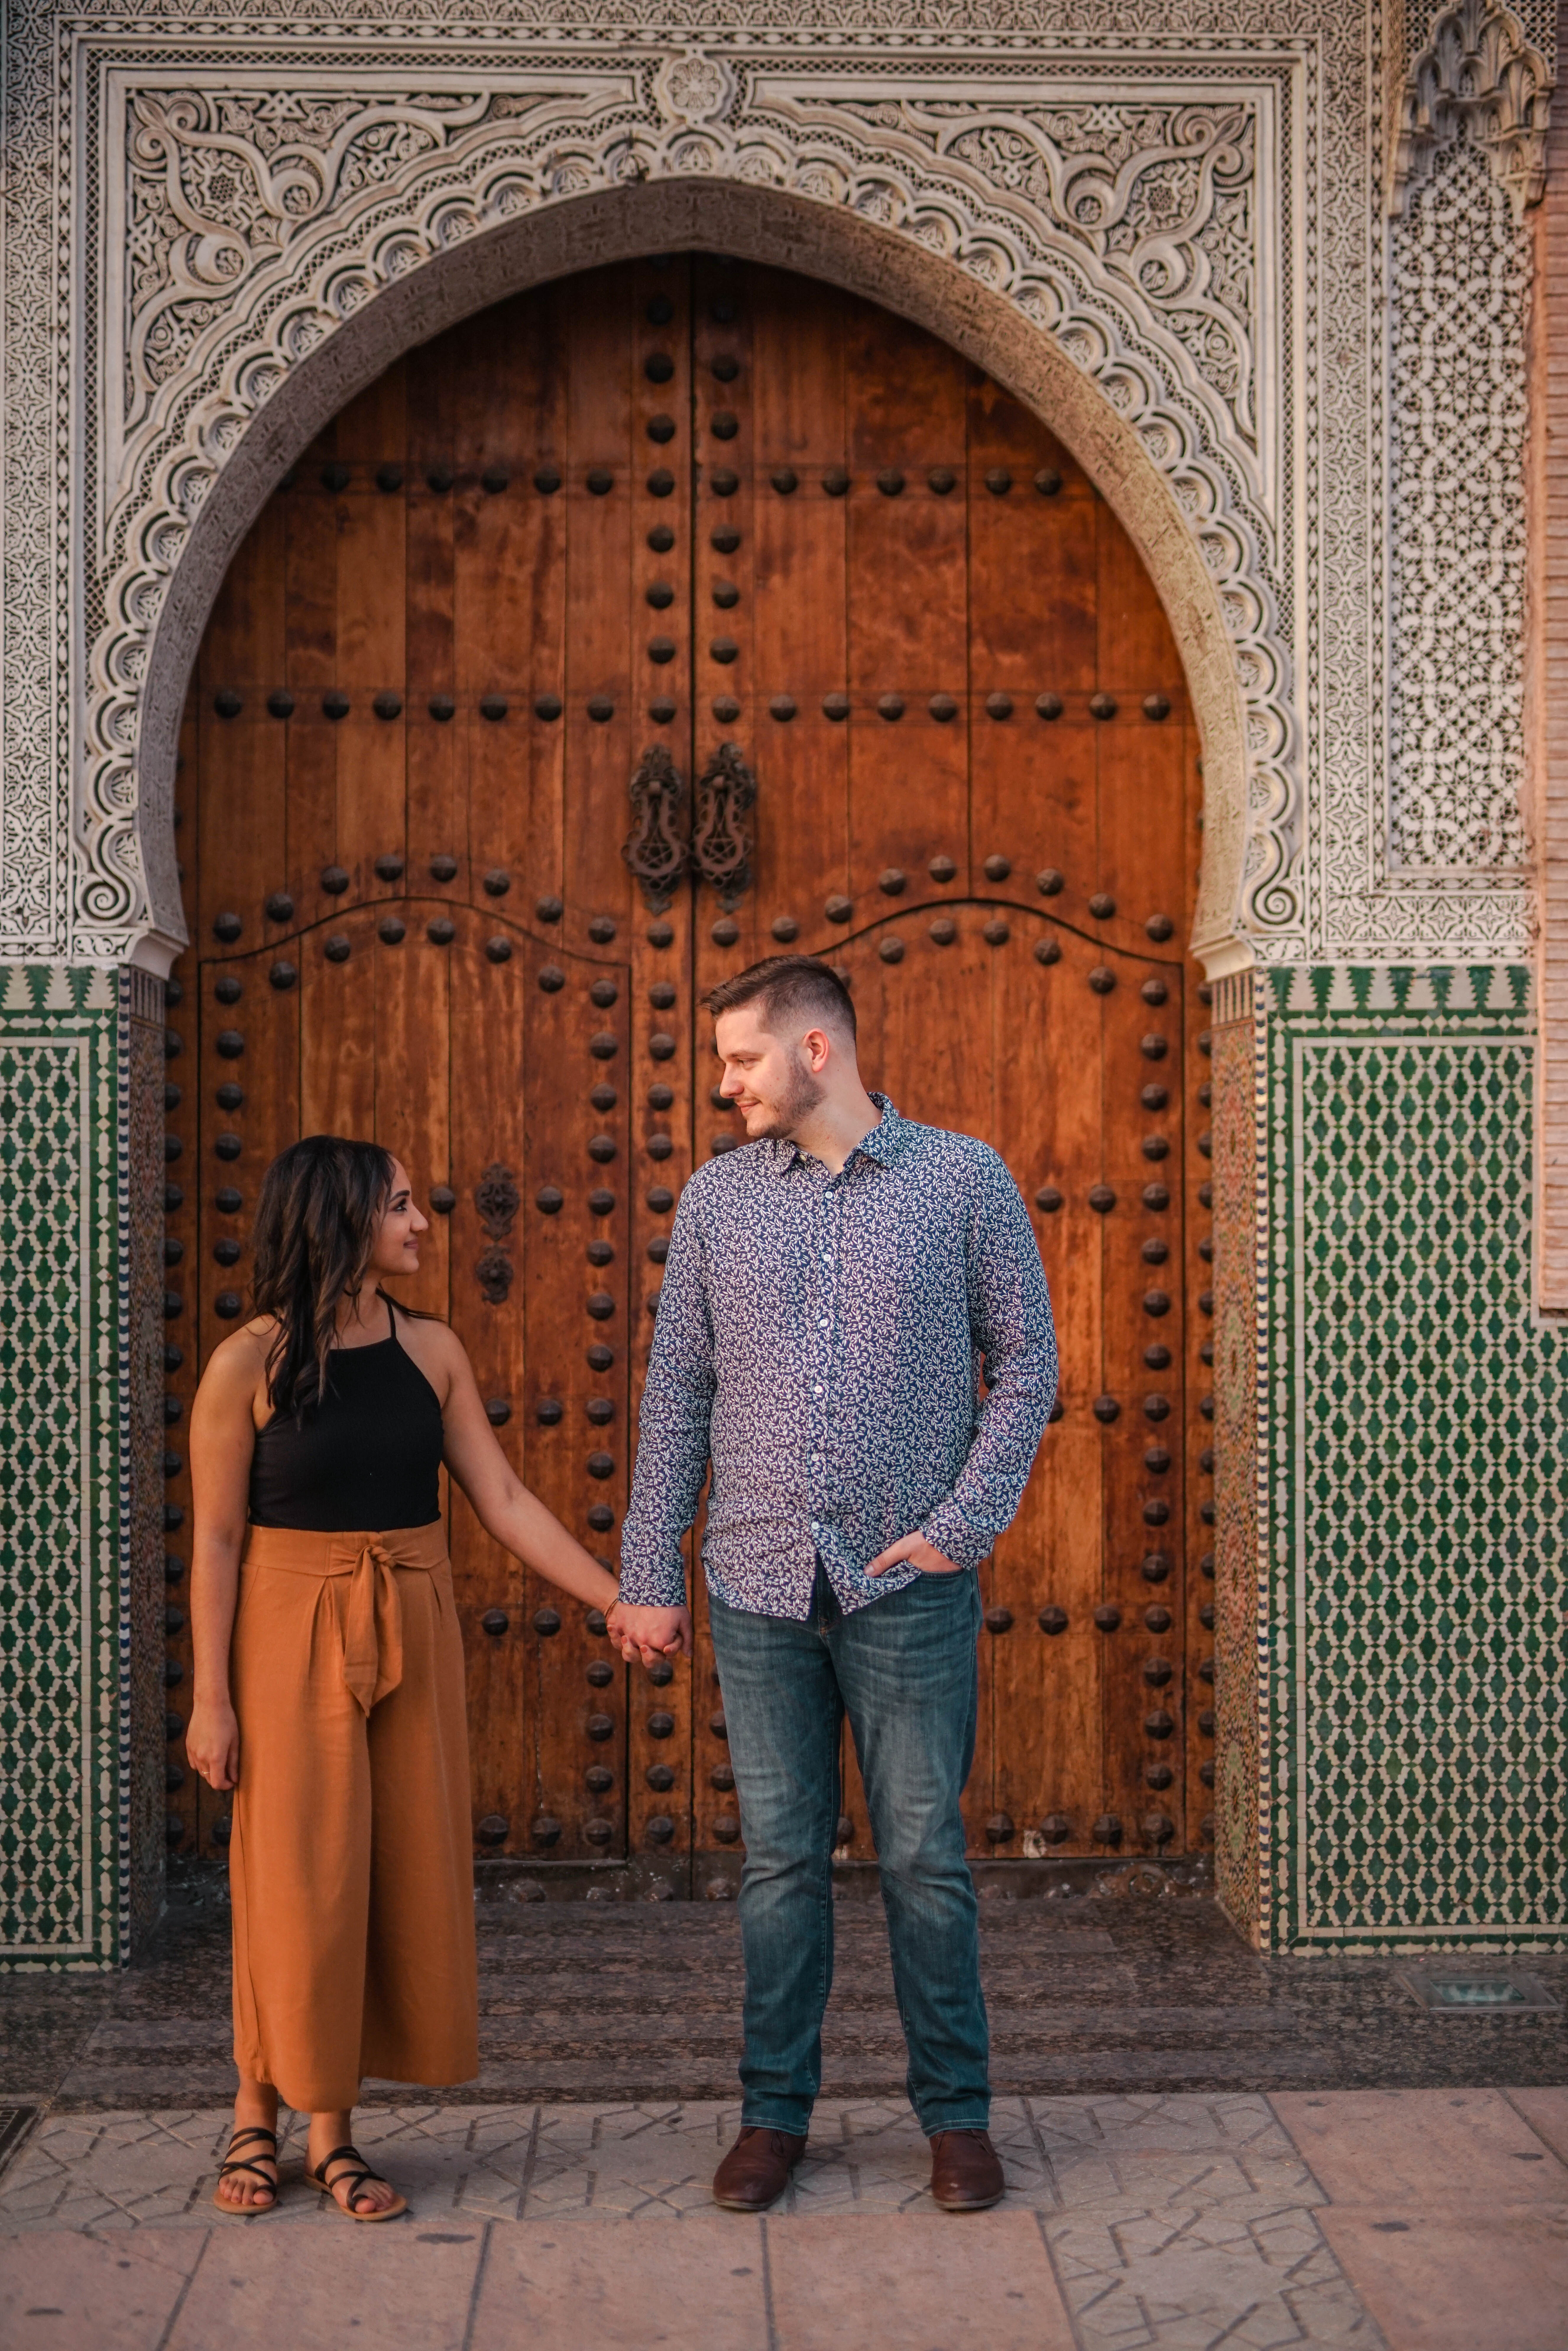 Our Couples Shoot in Marrakech, Morocco